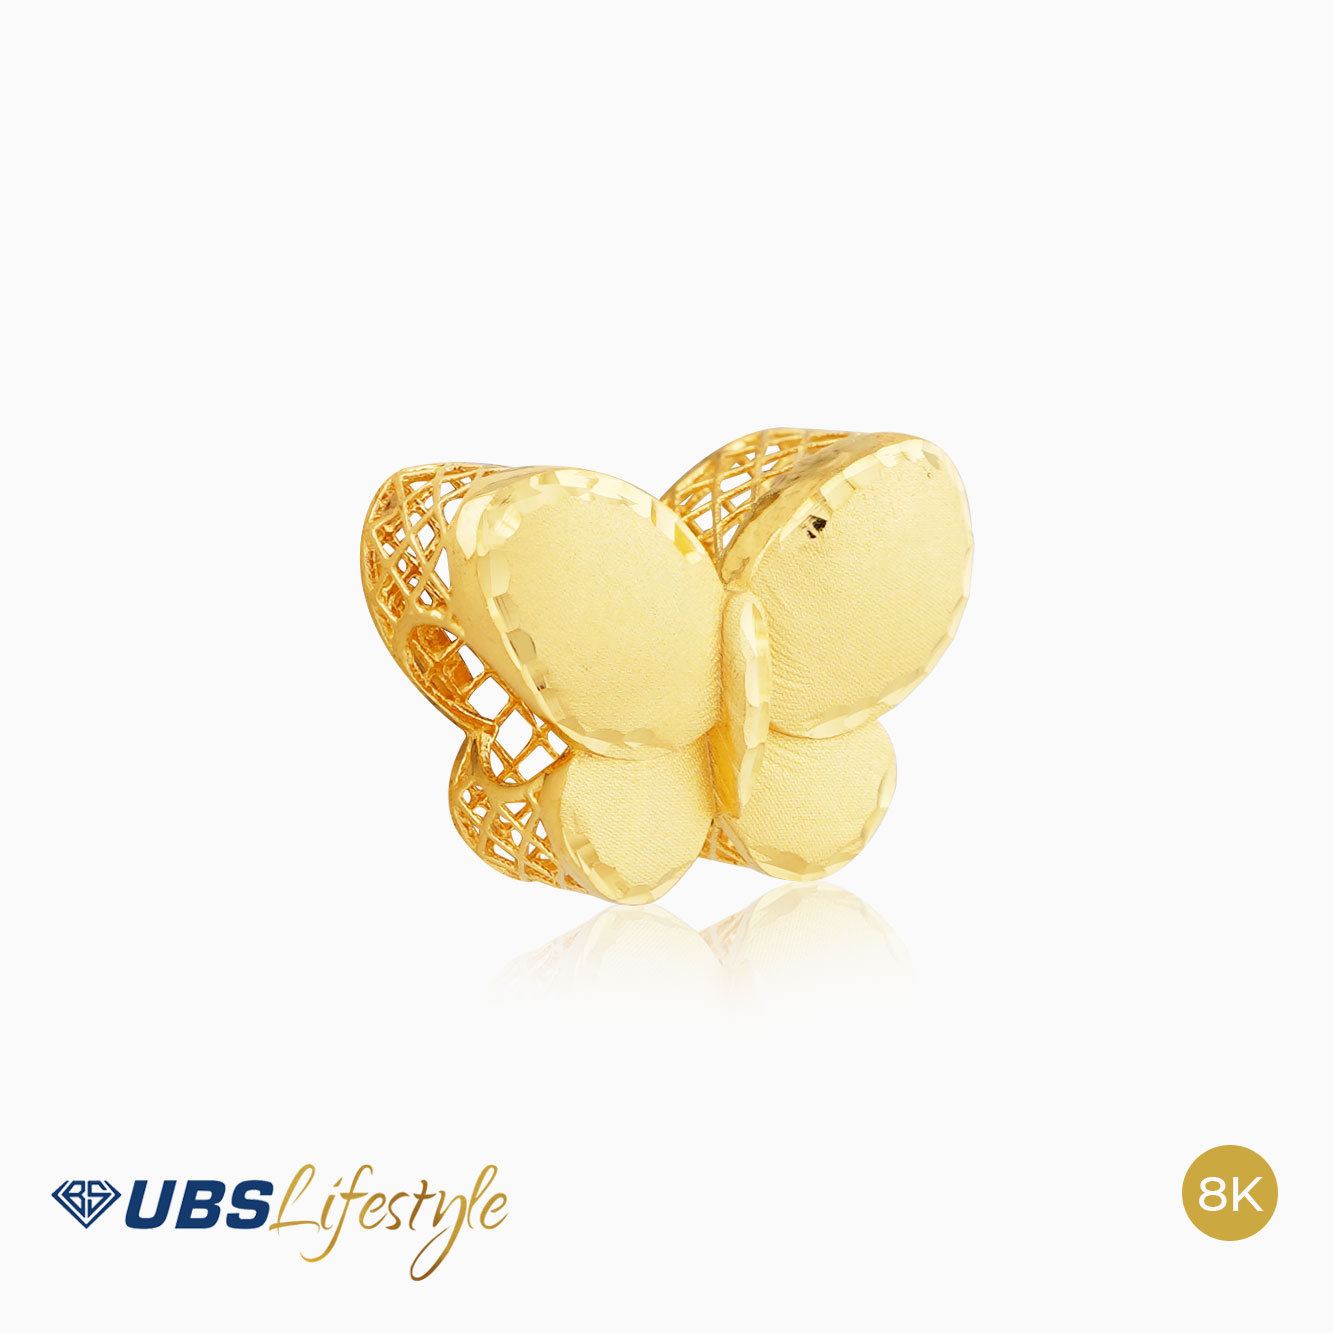 UBS Liontin Emas Sakura - Cdm0108 - 8K